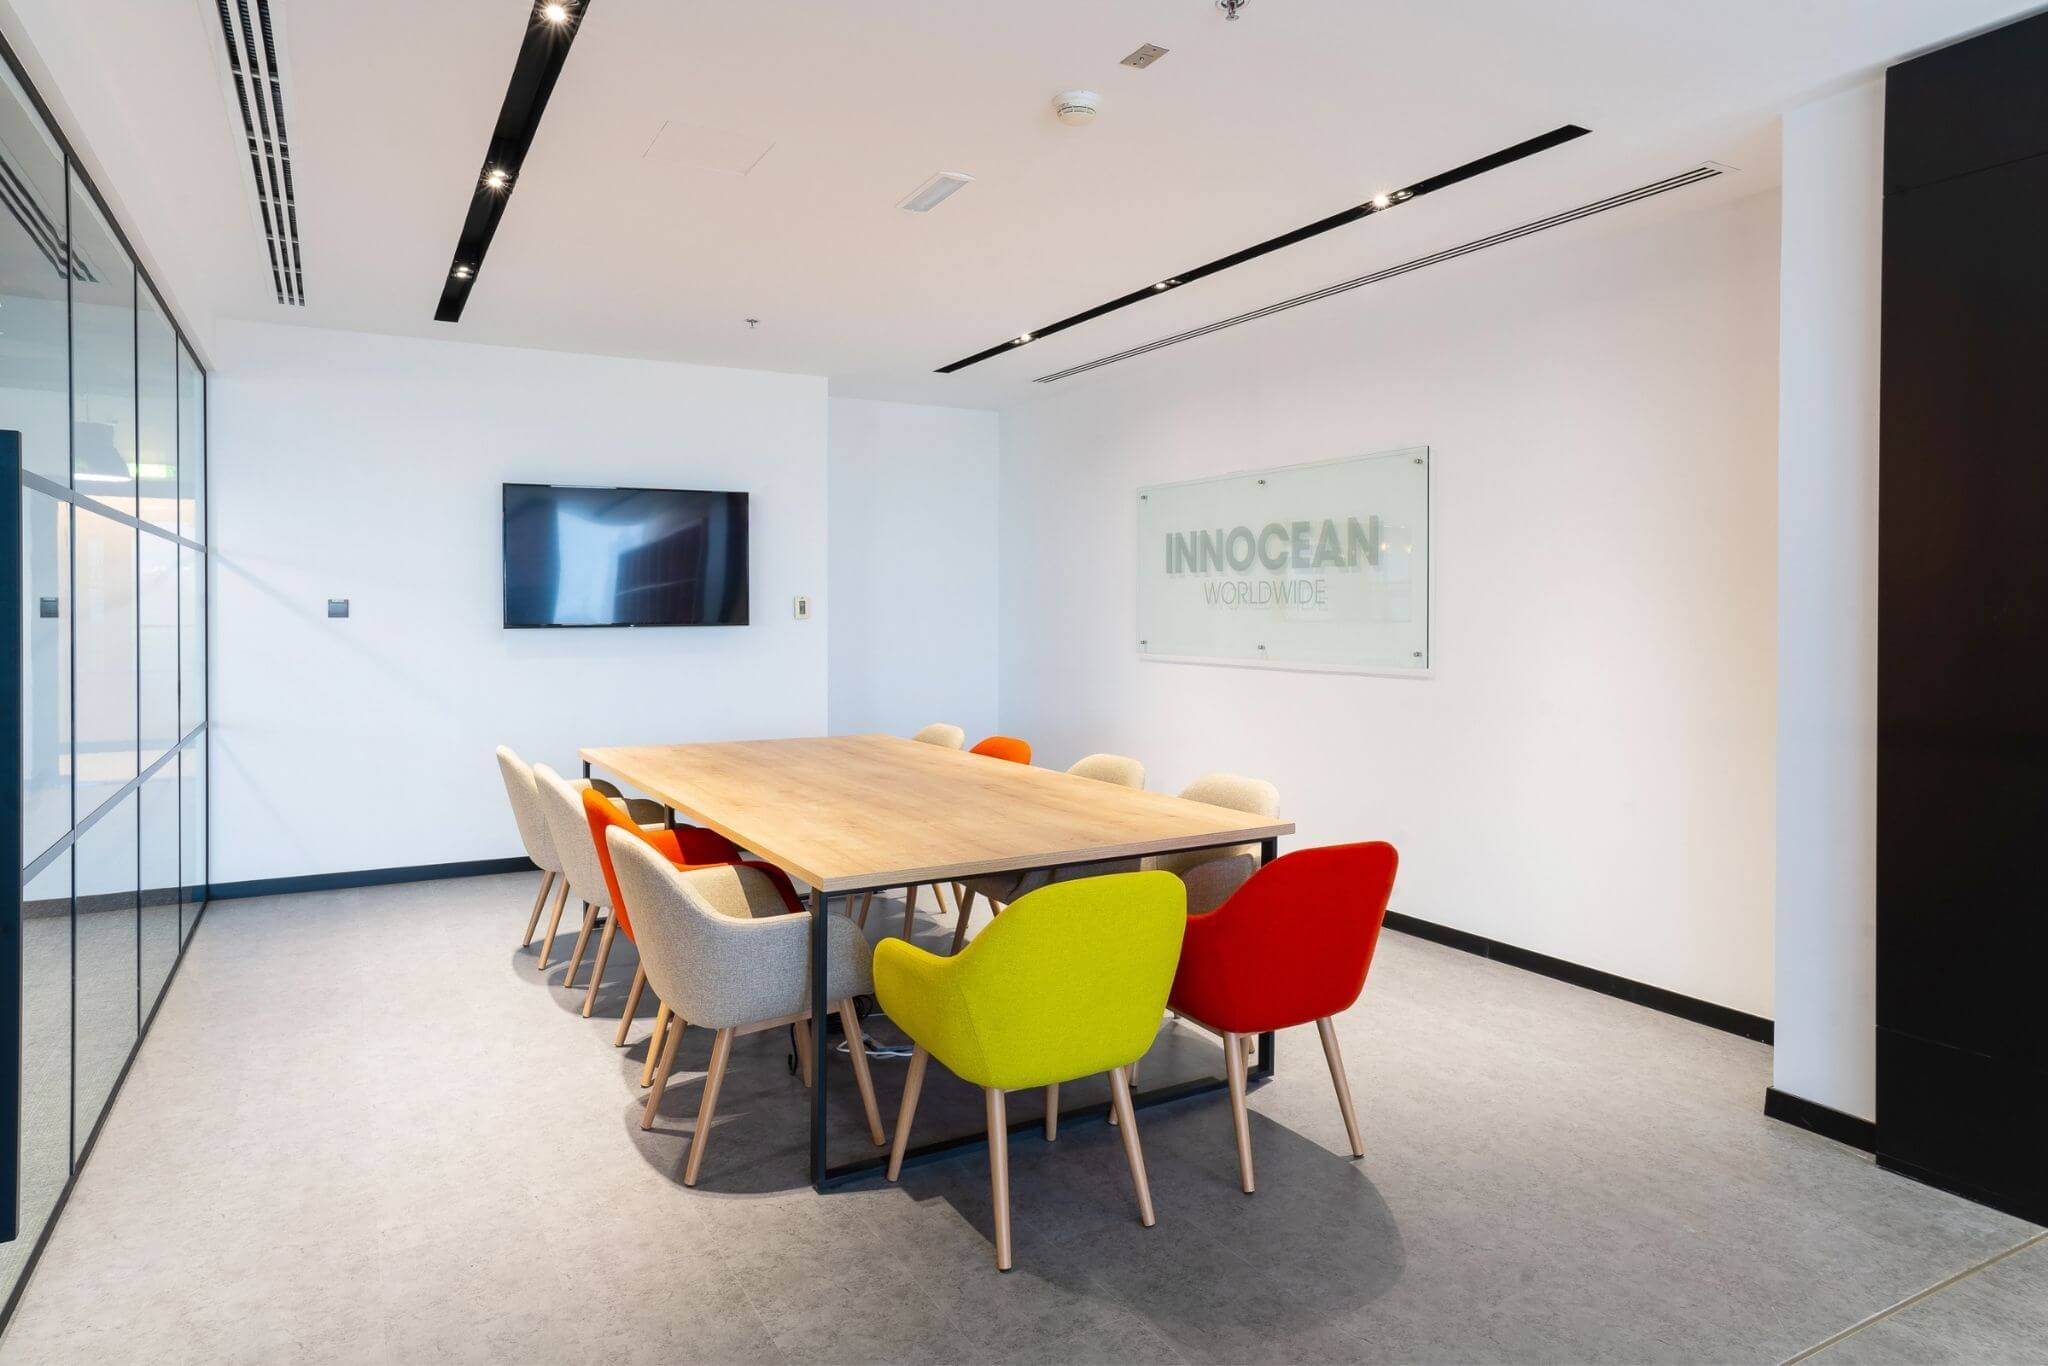 Innocean office in Dubai design and build by Motif Interiors6